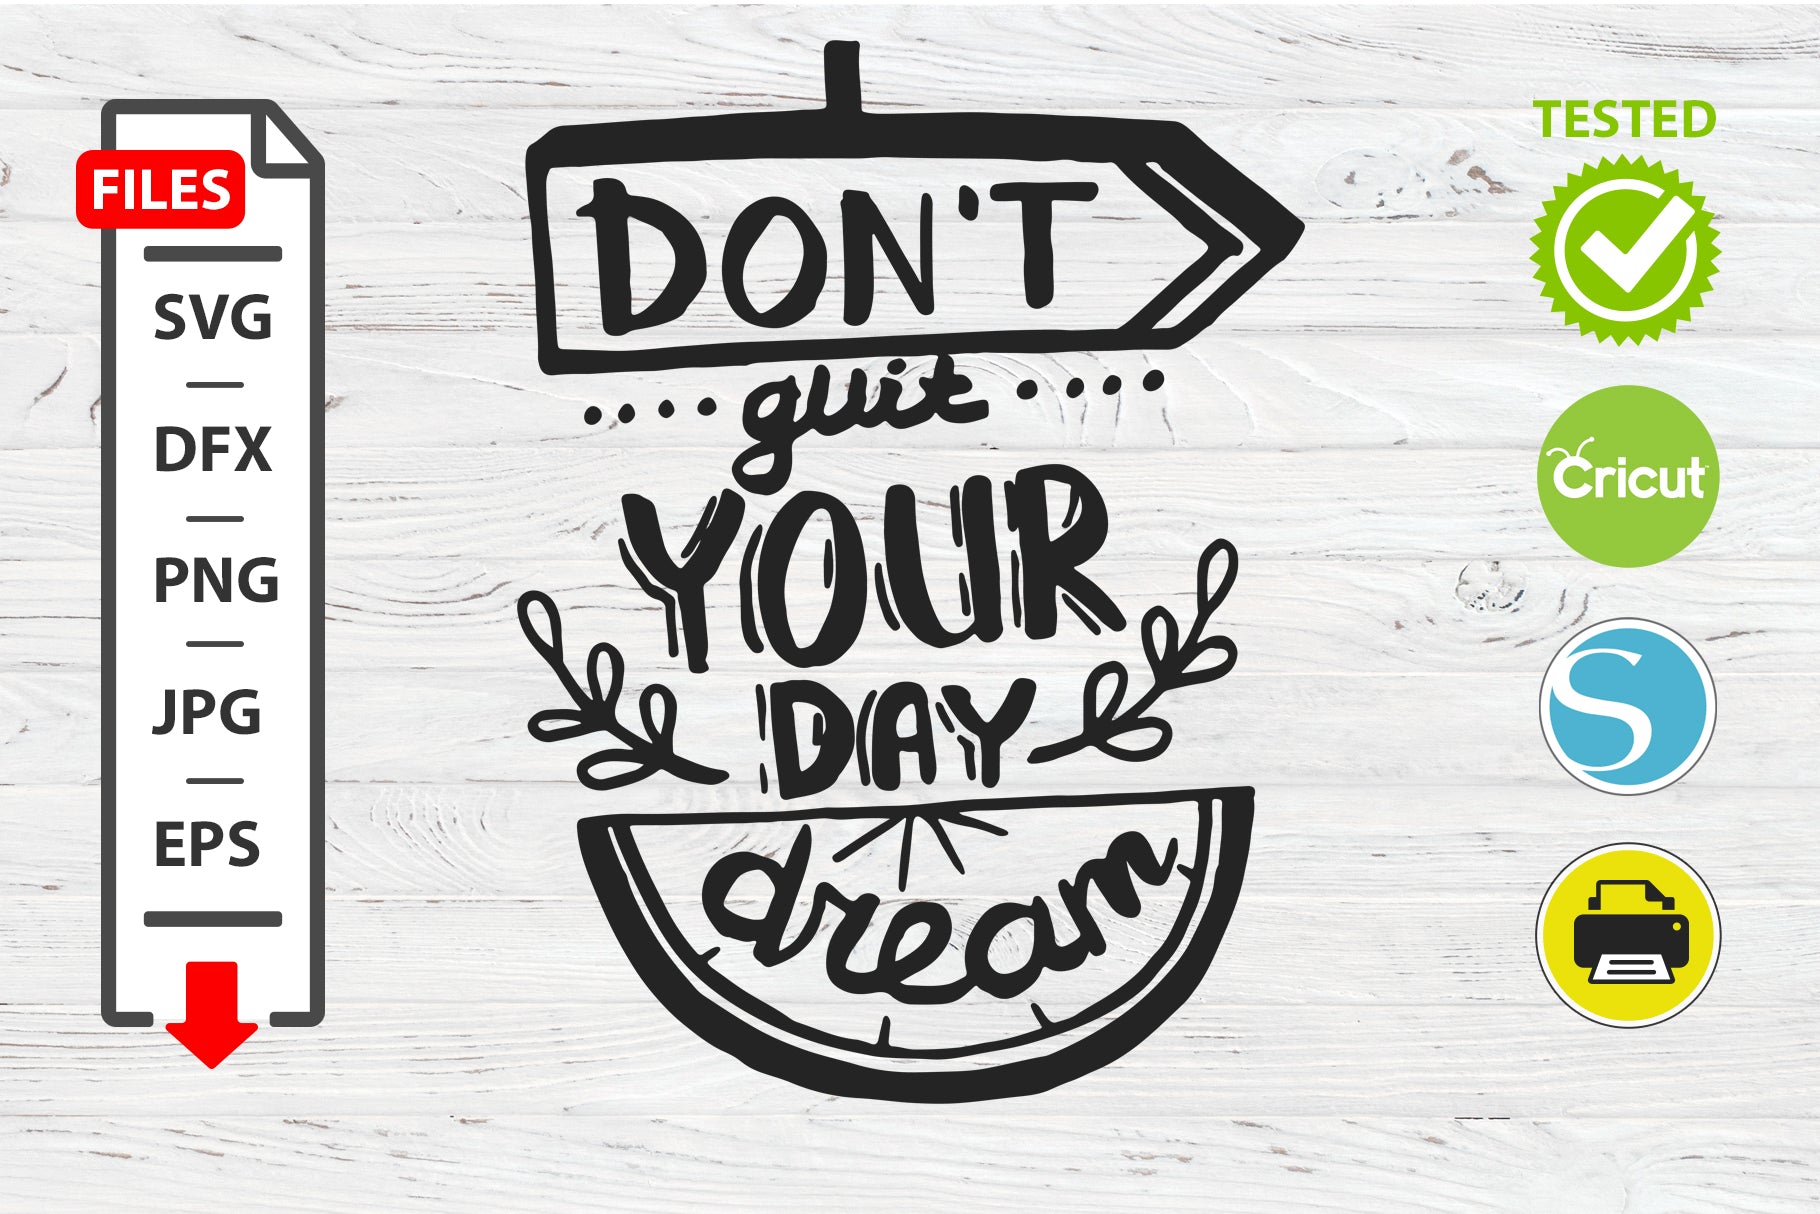 Don't quit your day dream motivational quote SVG Cricut Silhouette design.